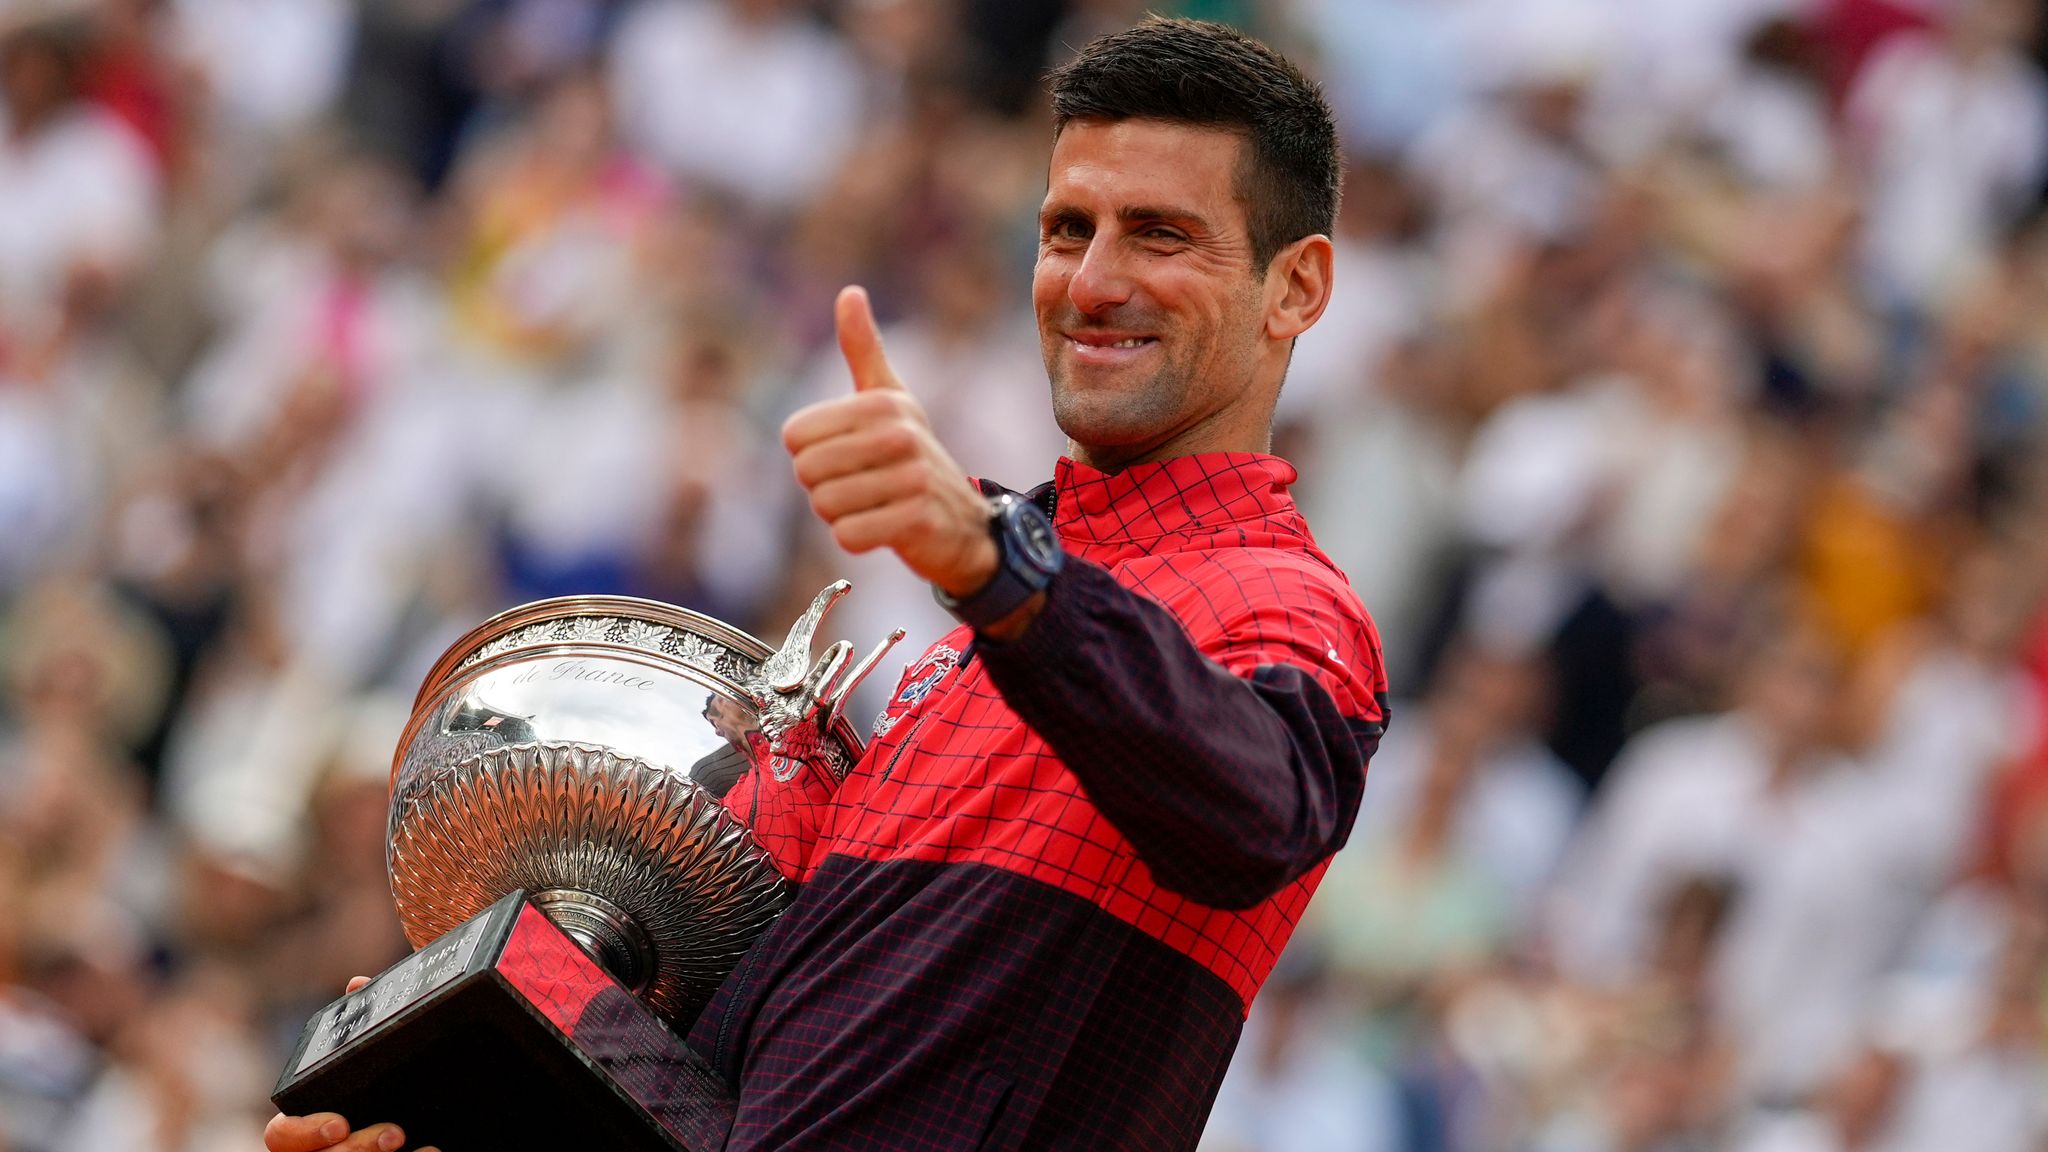 French Open Novak Djokovic defeats Casper Ruud to win his 23rd Grand Slam singles title Tennis News Sky Sports